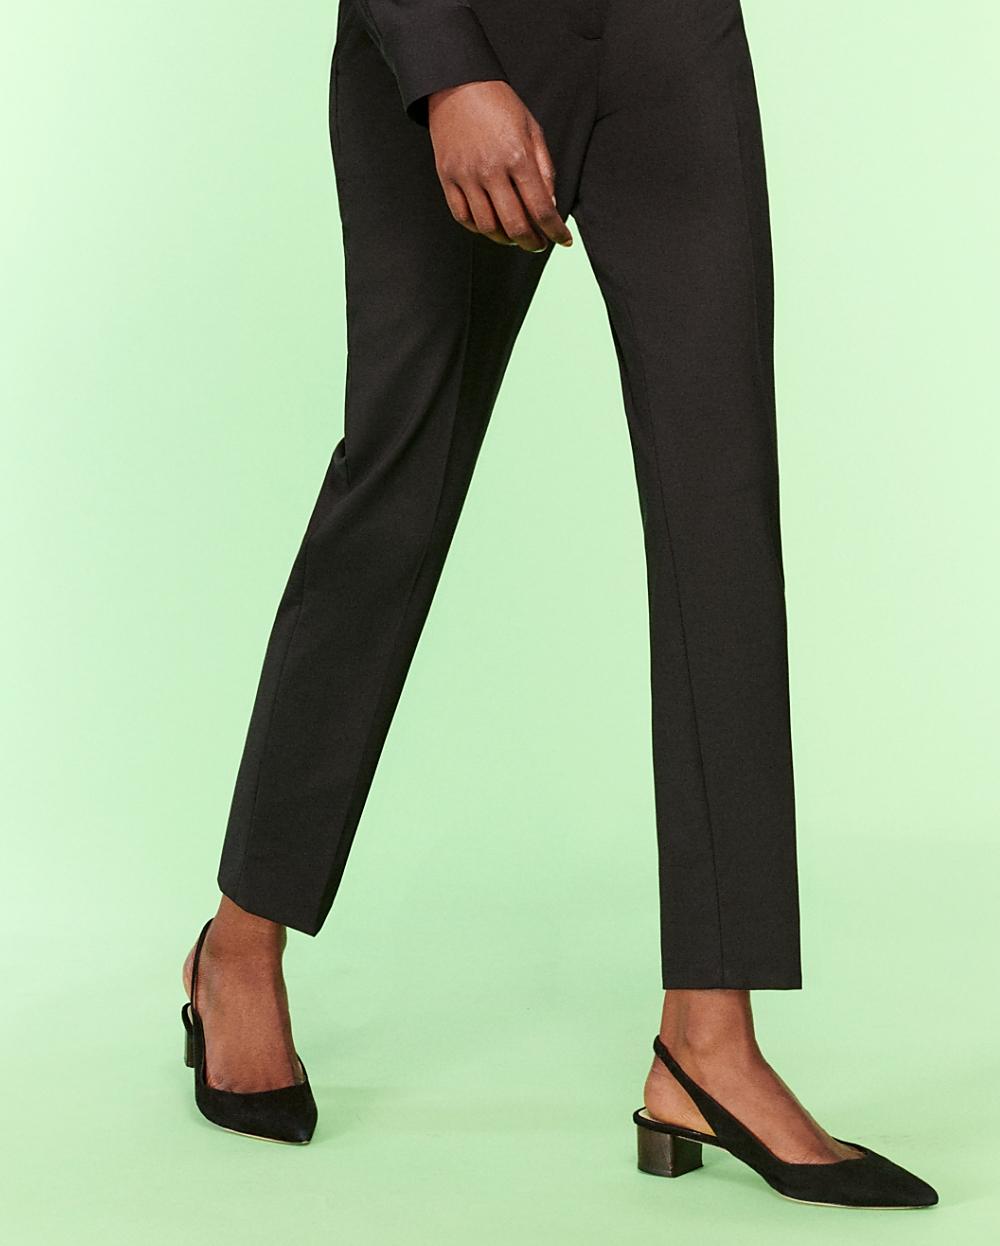 discount 63% Multicolored L WOMEN FASHION Trousers Slacks Basic Polinesia slacks 